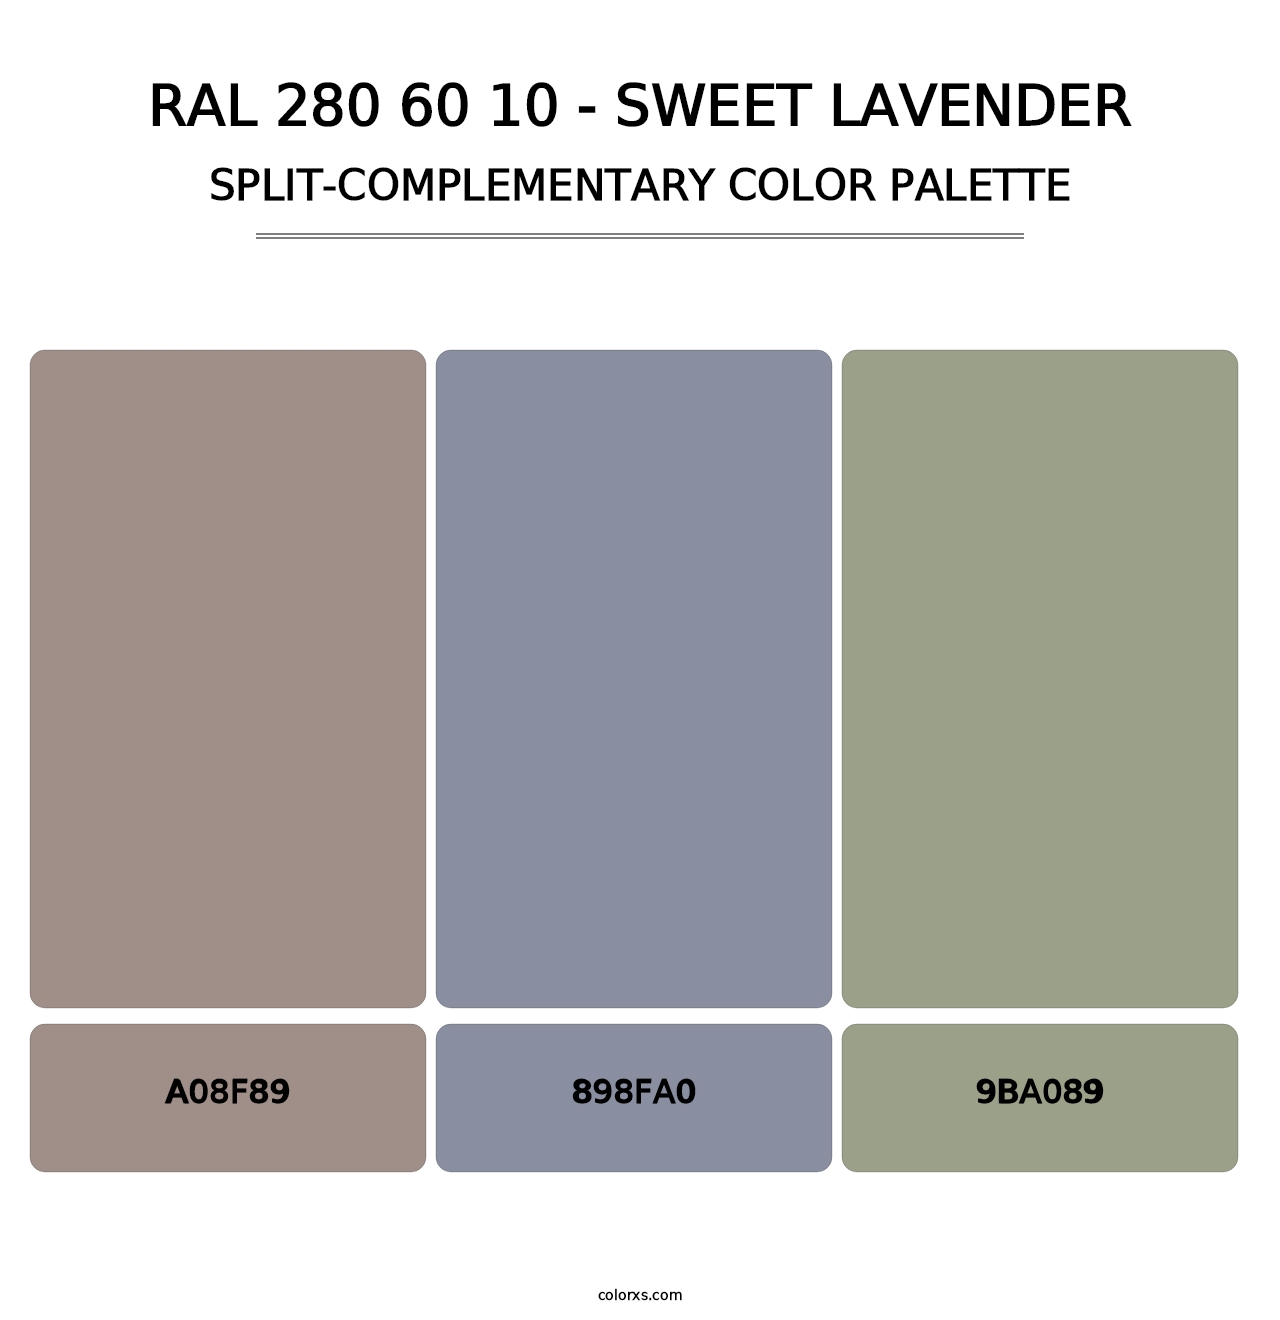 RAL 280 60 10 - Sweet Lavender - Split-Complementary Color Palette